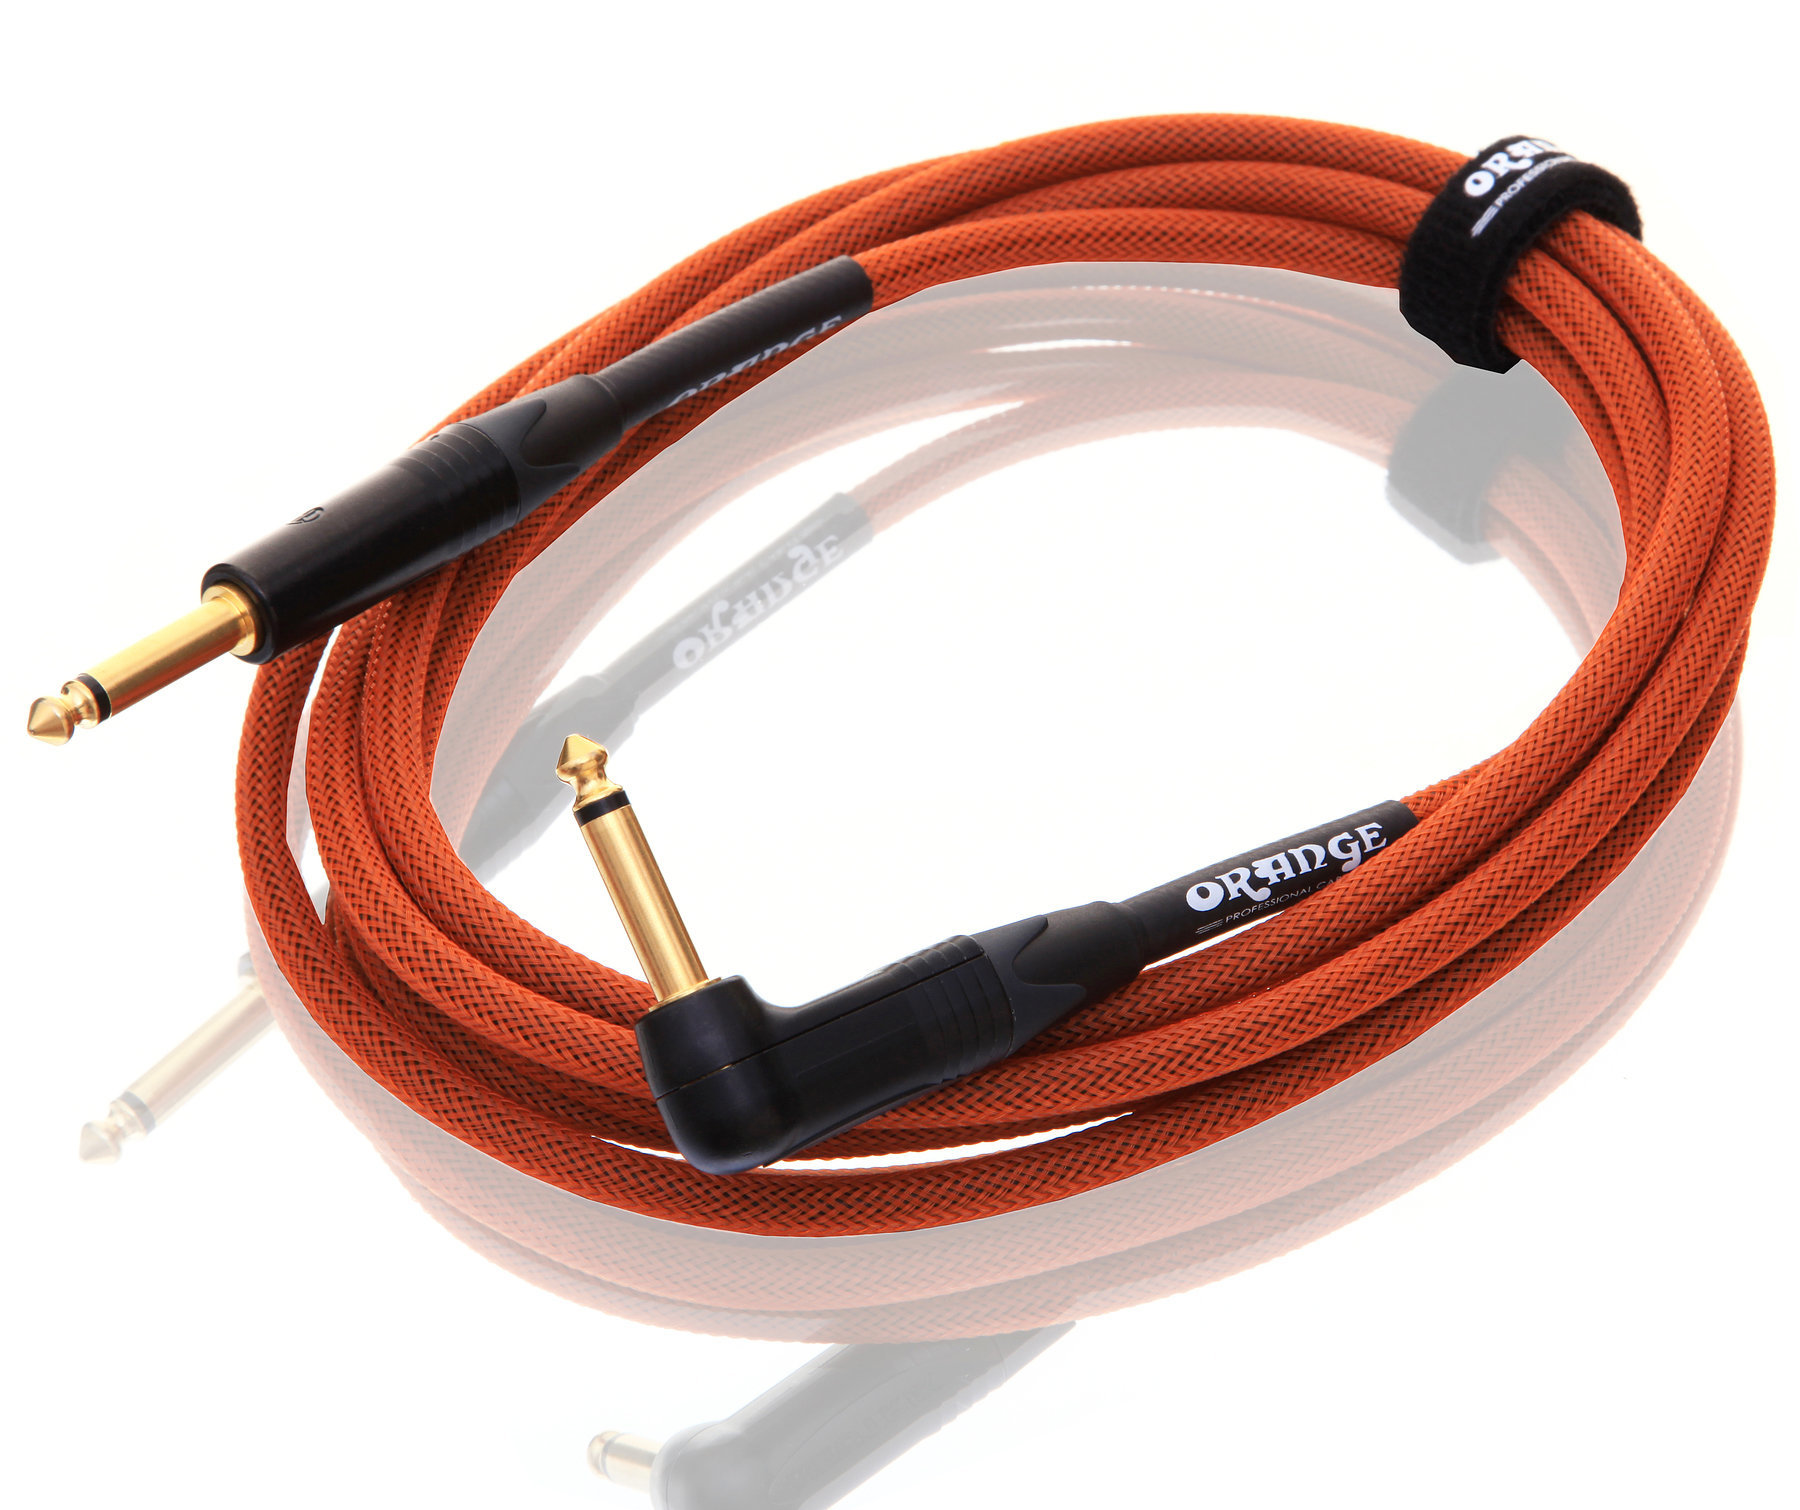 Nástrojový kabel Orange Instrument Cable A